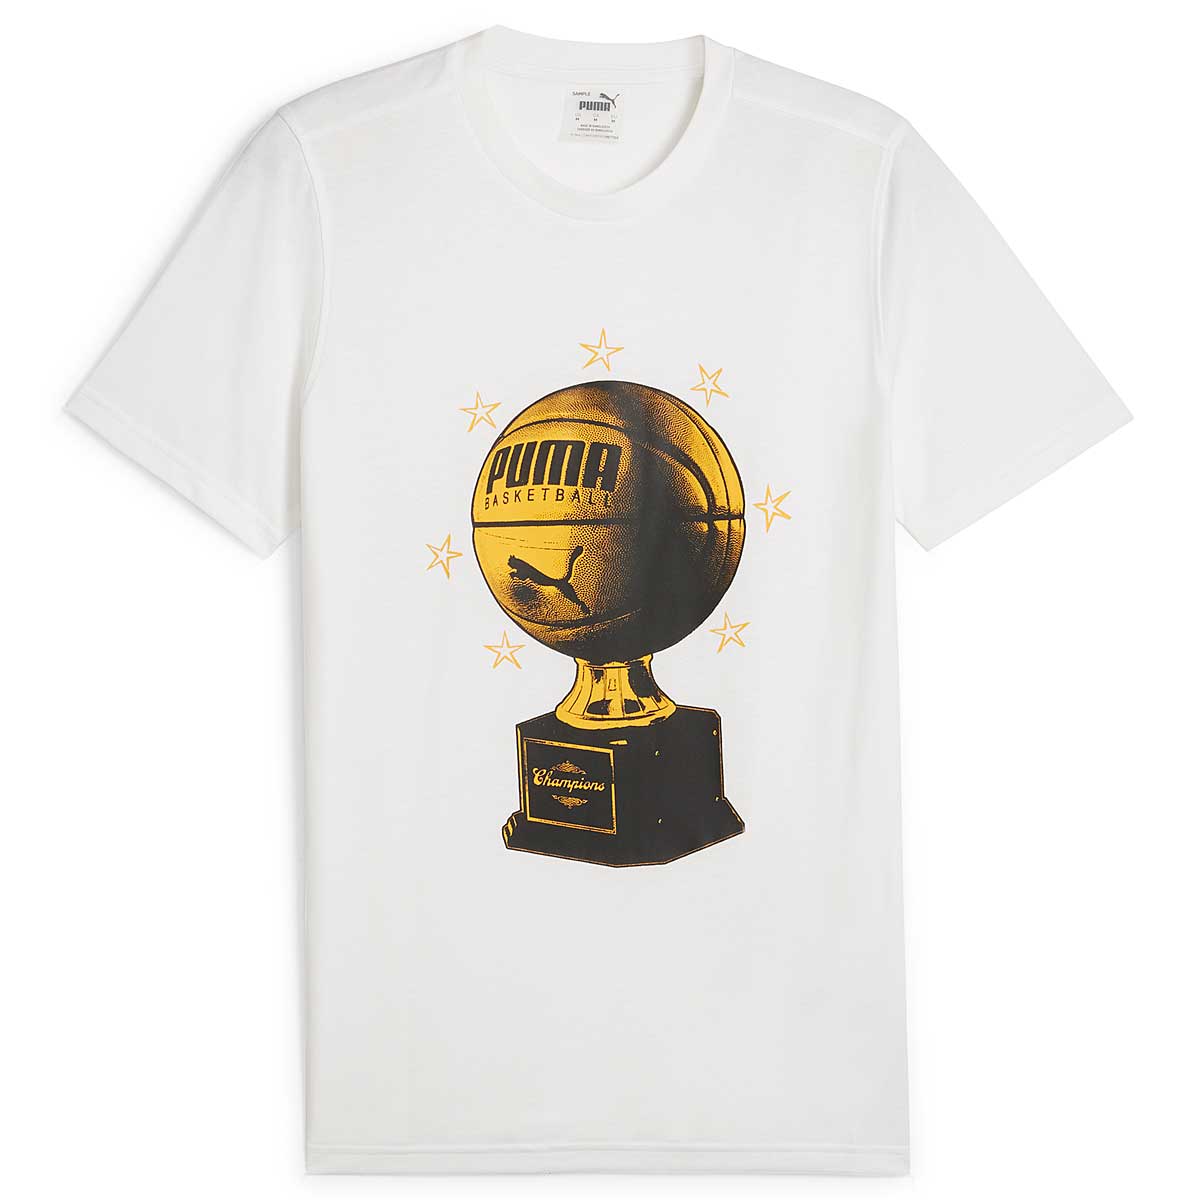 Puma Tsa T-shirt 3, Weiß XL